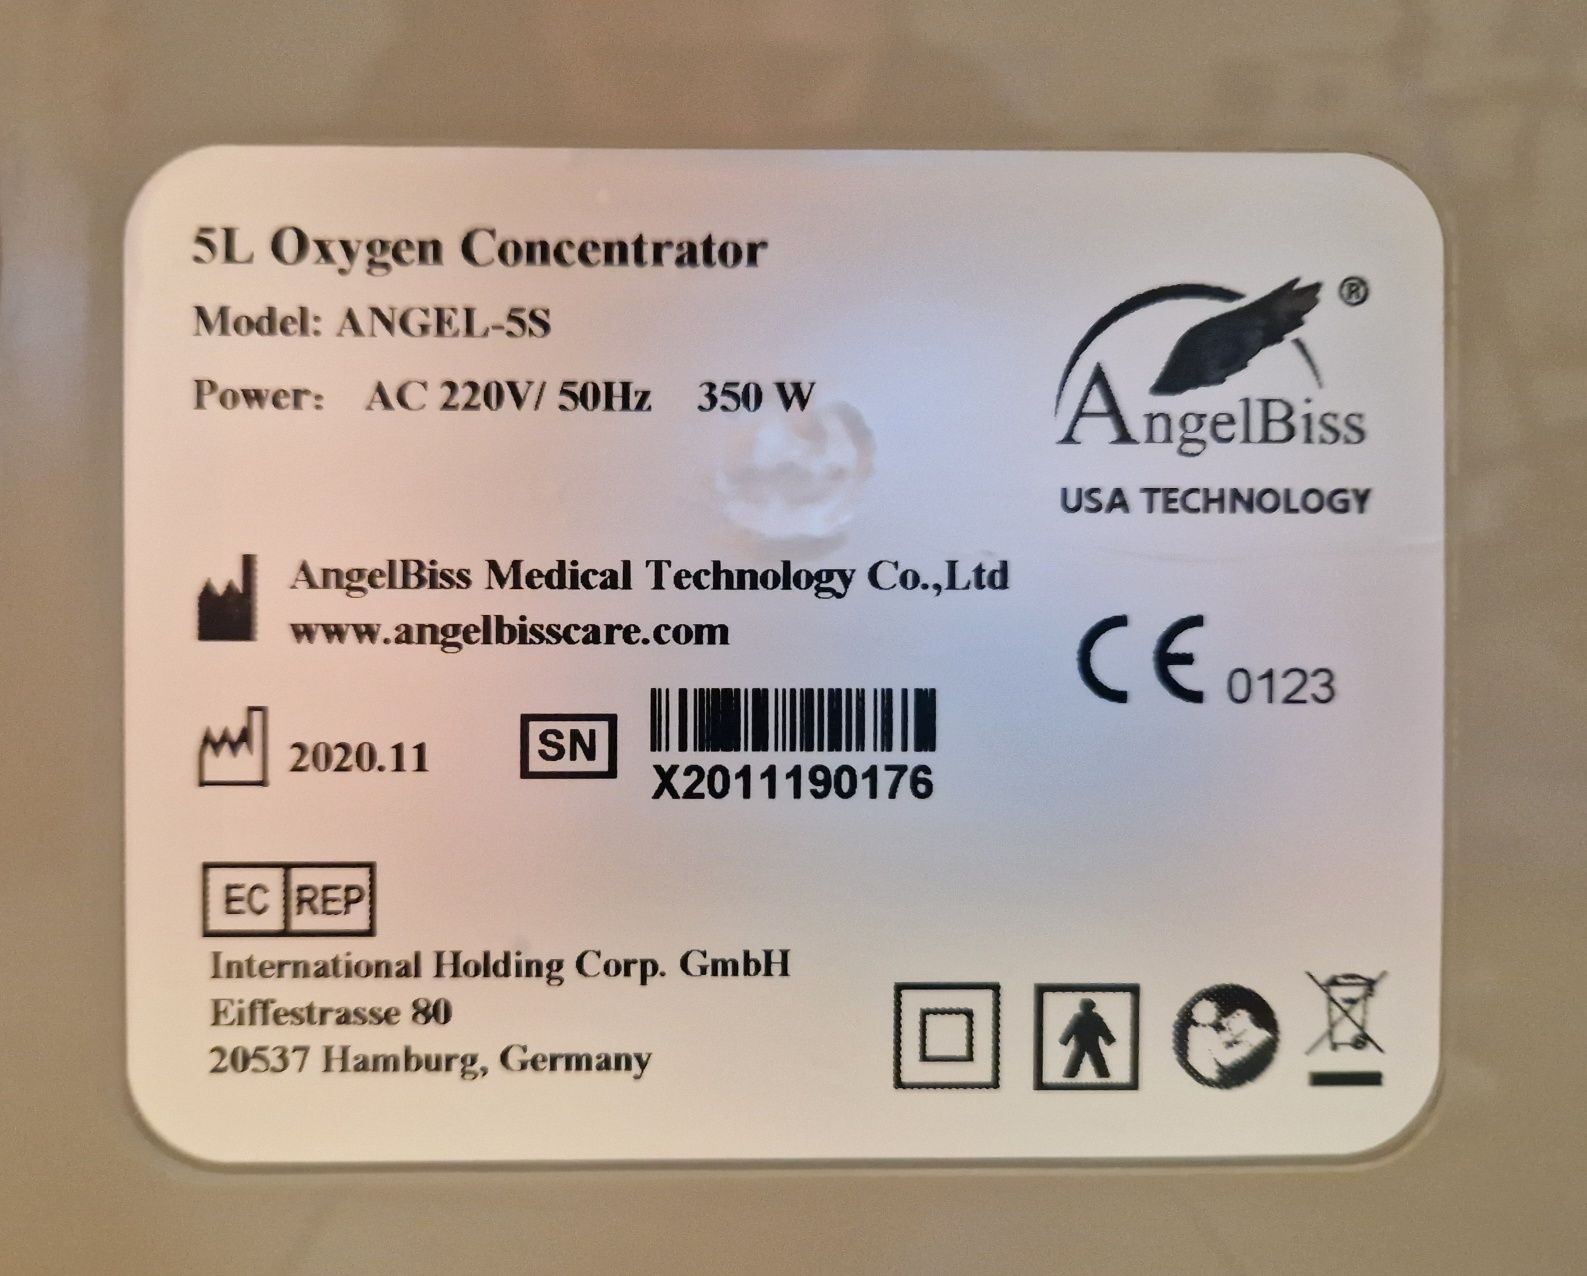 Koncentrator tlenu Angel Biss 5L. Amerykanska technologia. Prawie nowy